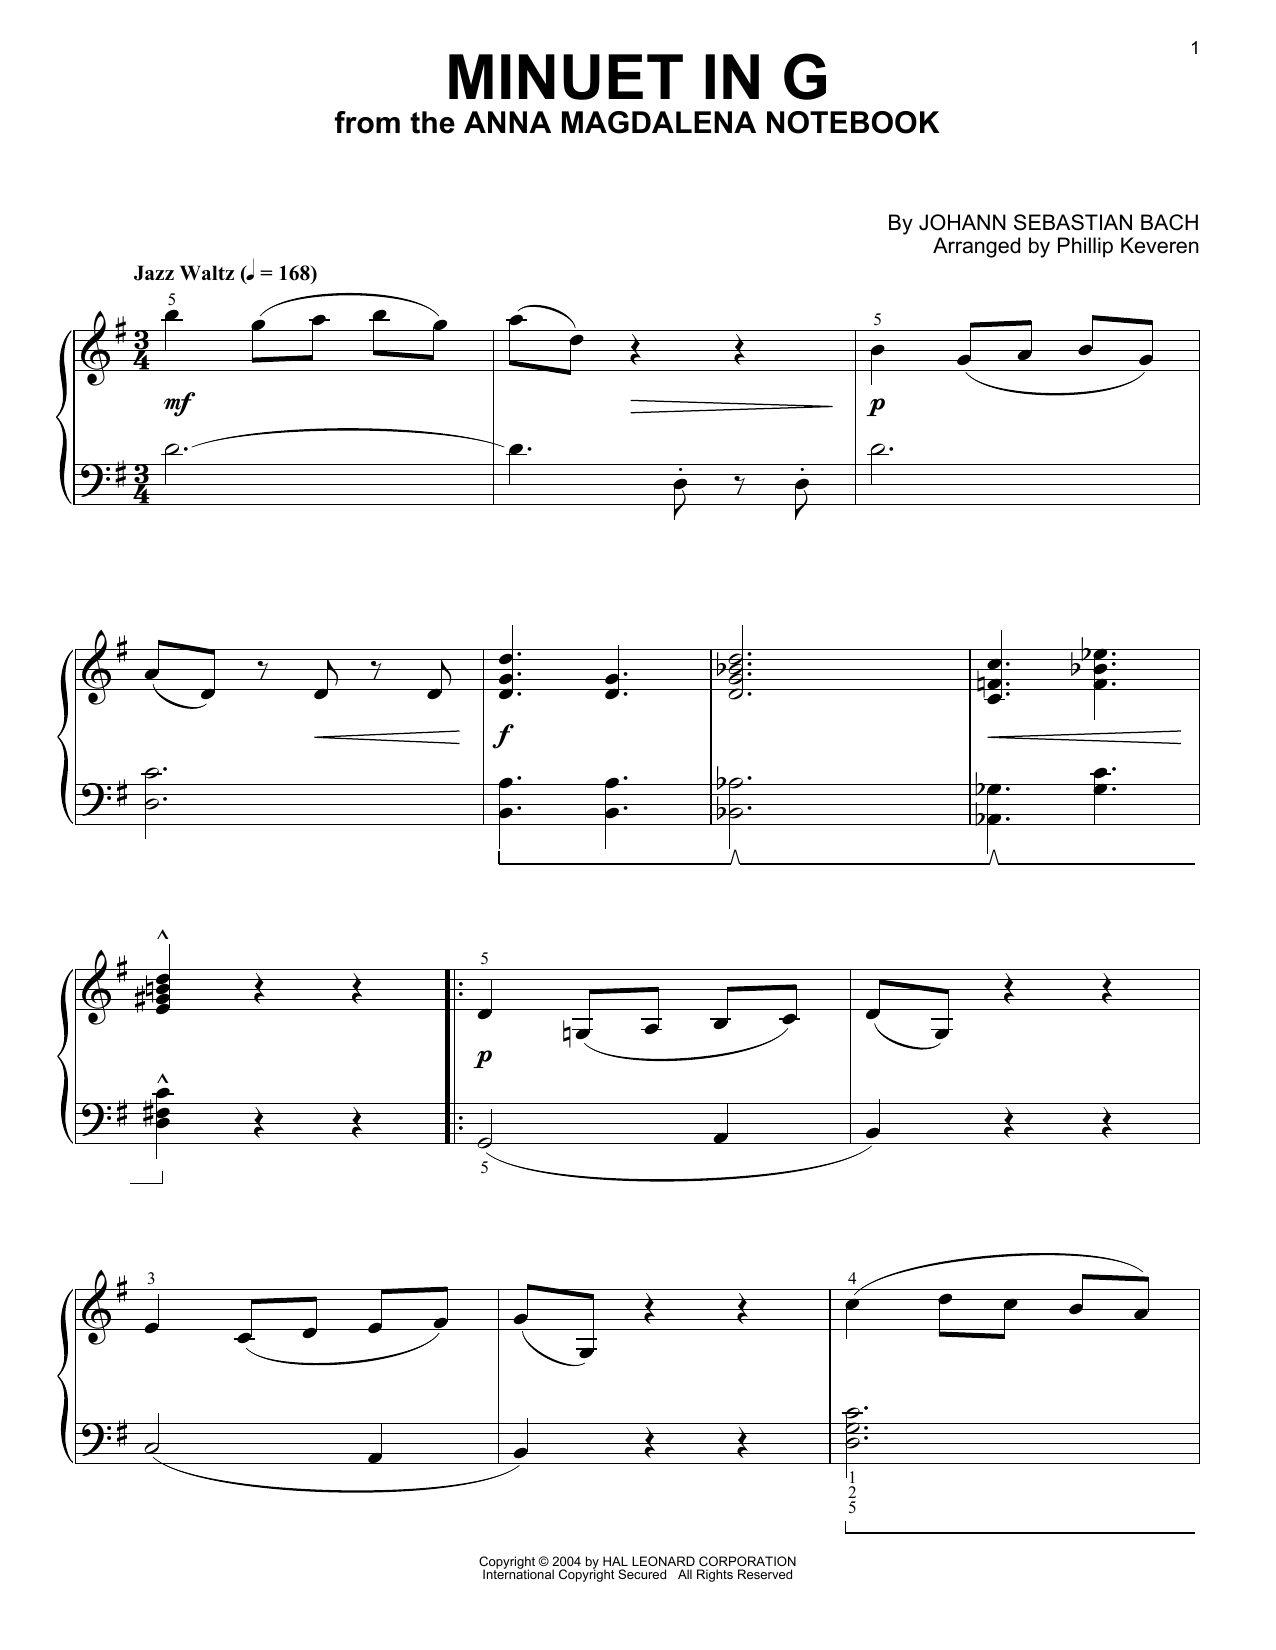 Johann Sebastian Bach Minuet In G [Jazz version] (arr. Phillip Keveren) Sheet Music Notes & Chords for Piano - Download or Print PDF